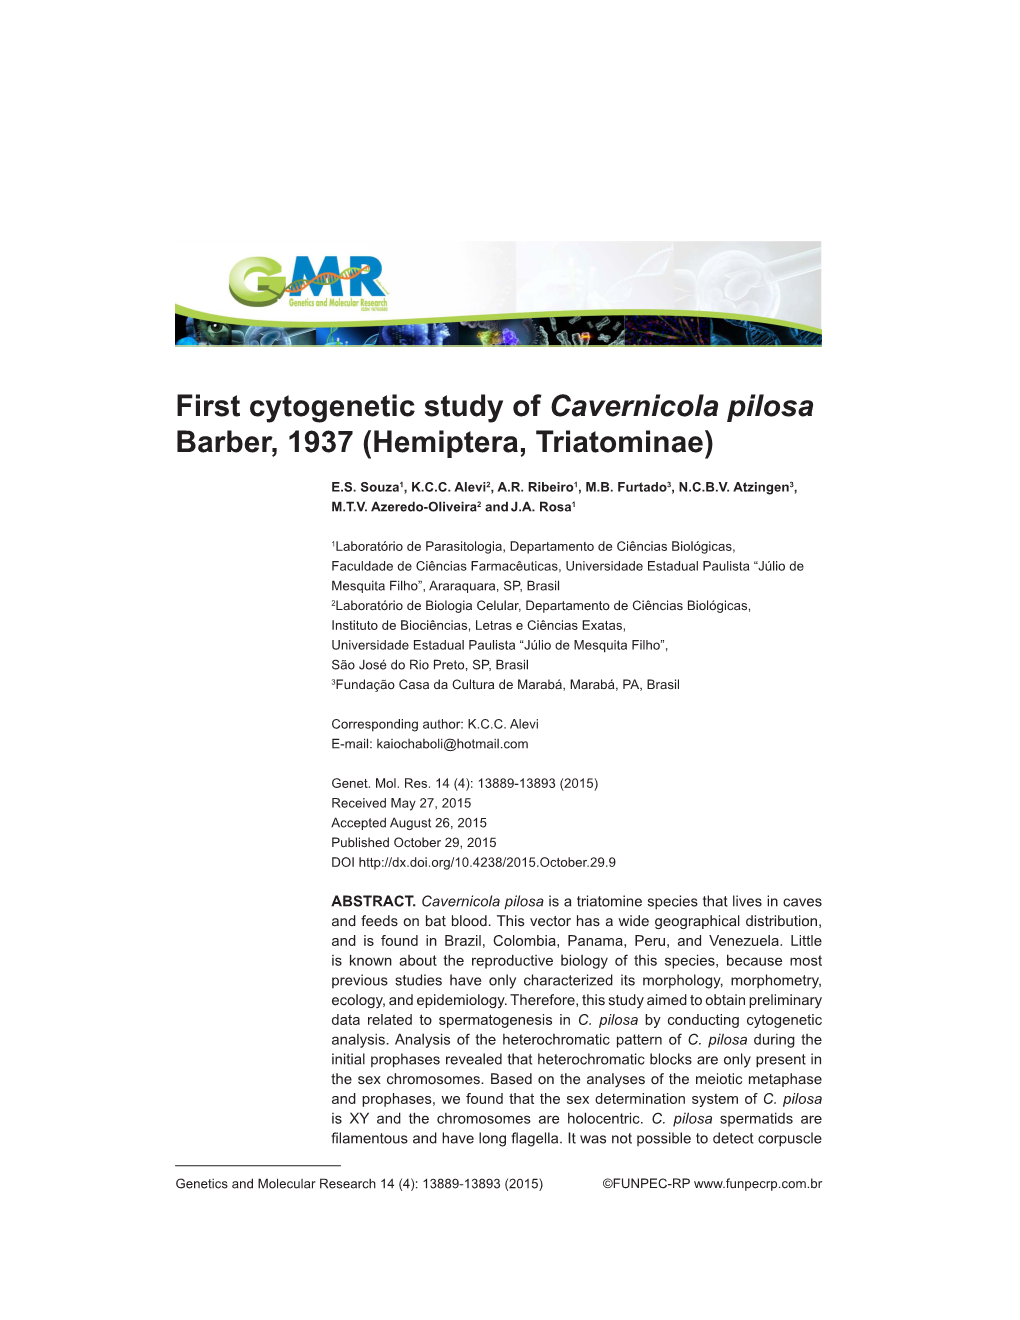 First Cytogenetic Study of Cavernicola Pilosa Barber, 1937 (Hemiptera, Triatominae)